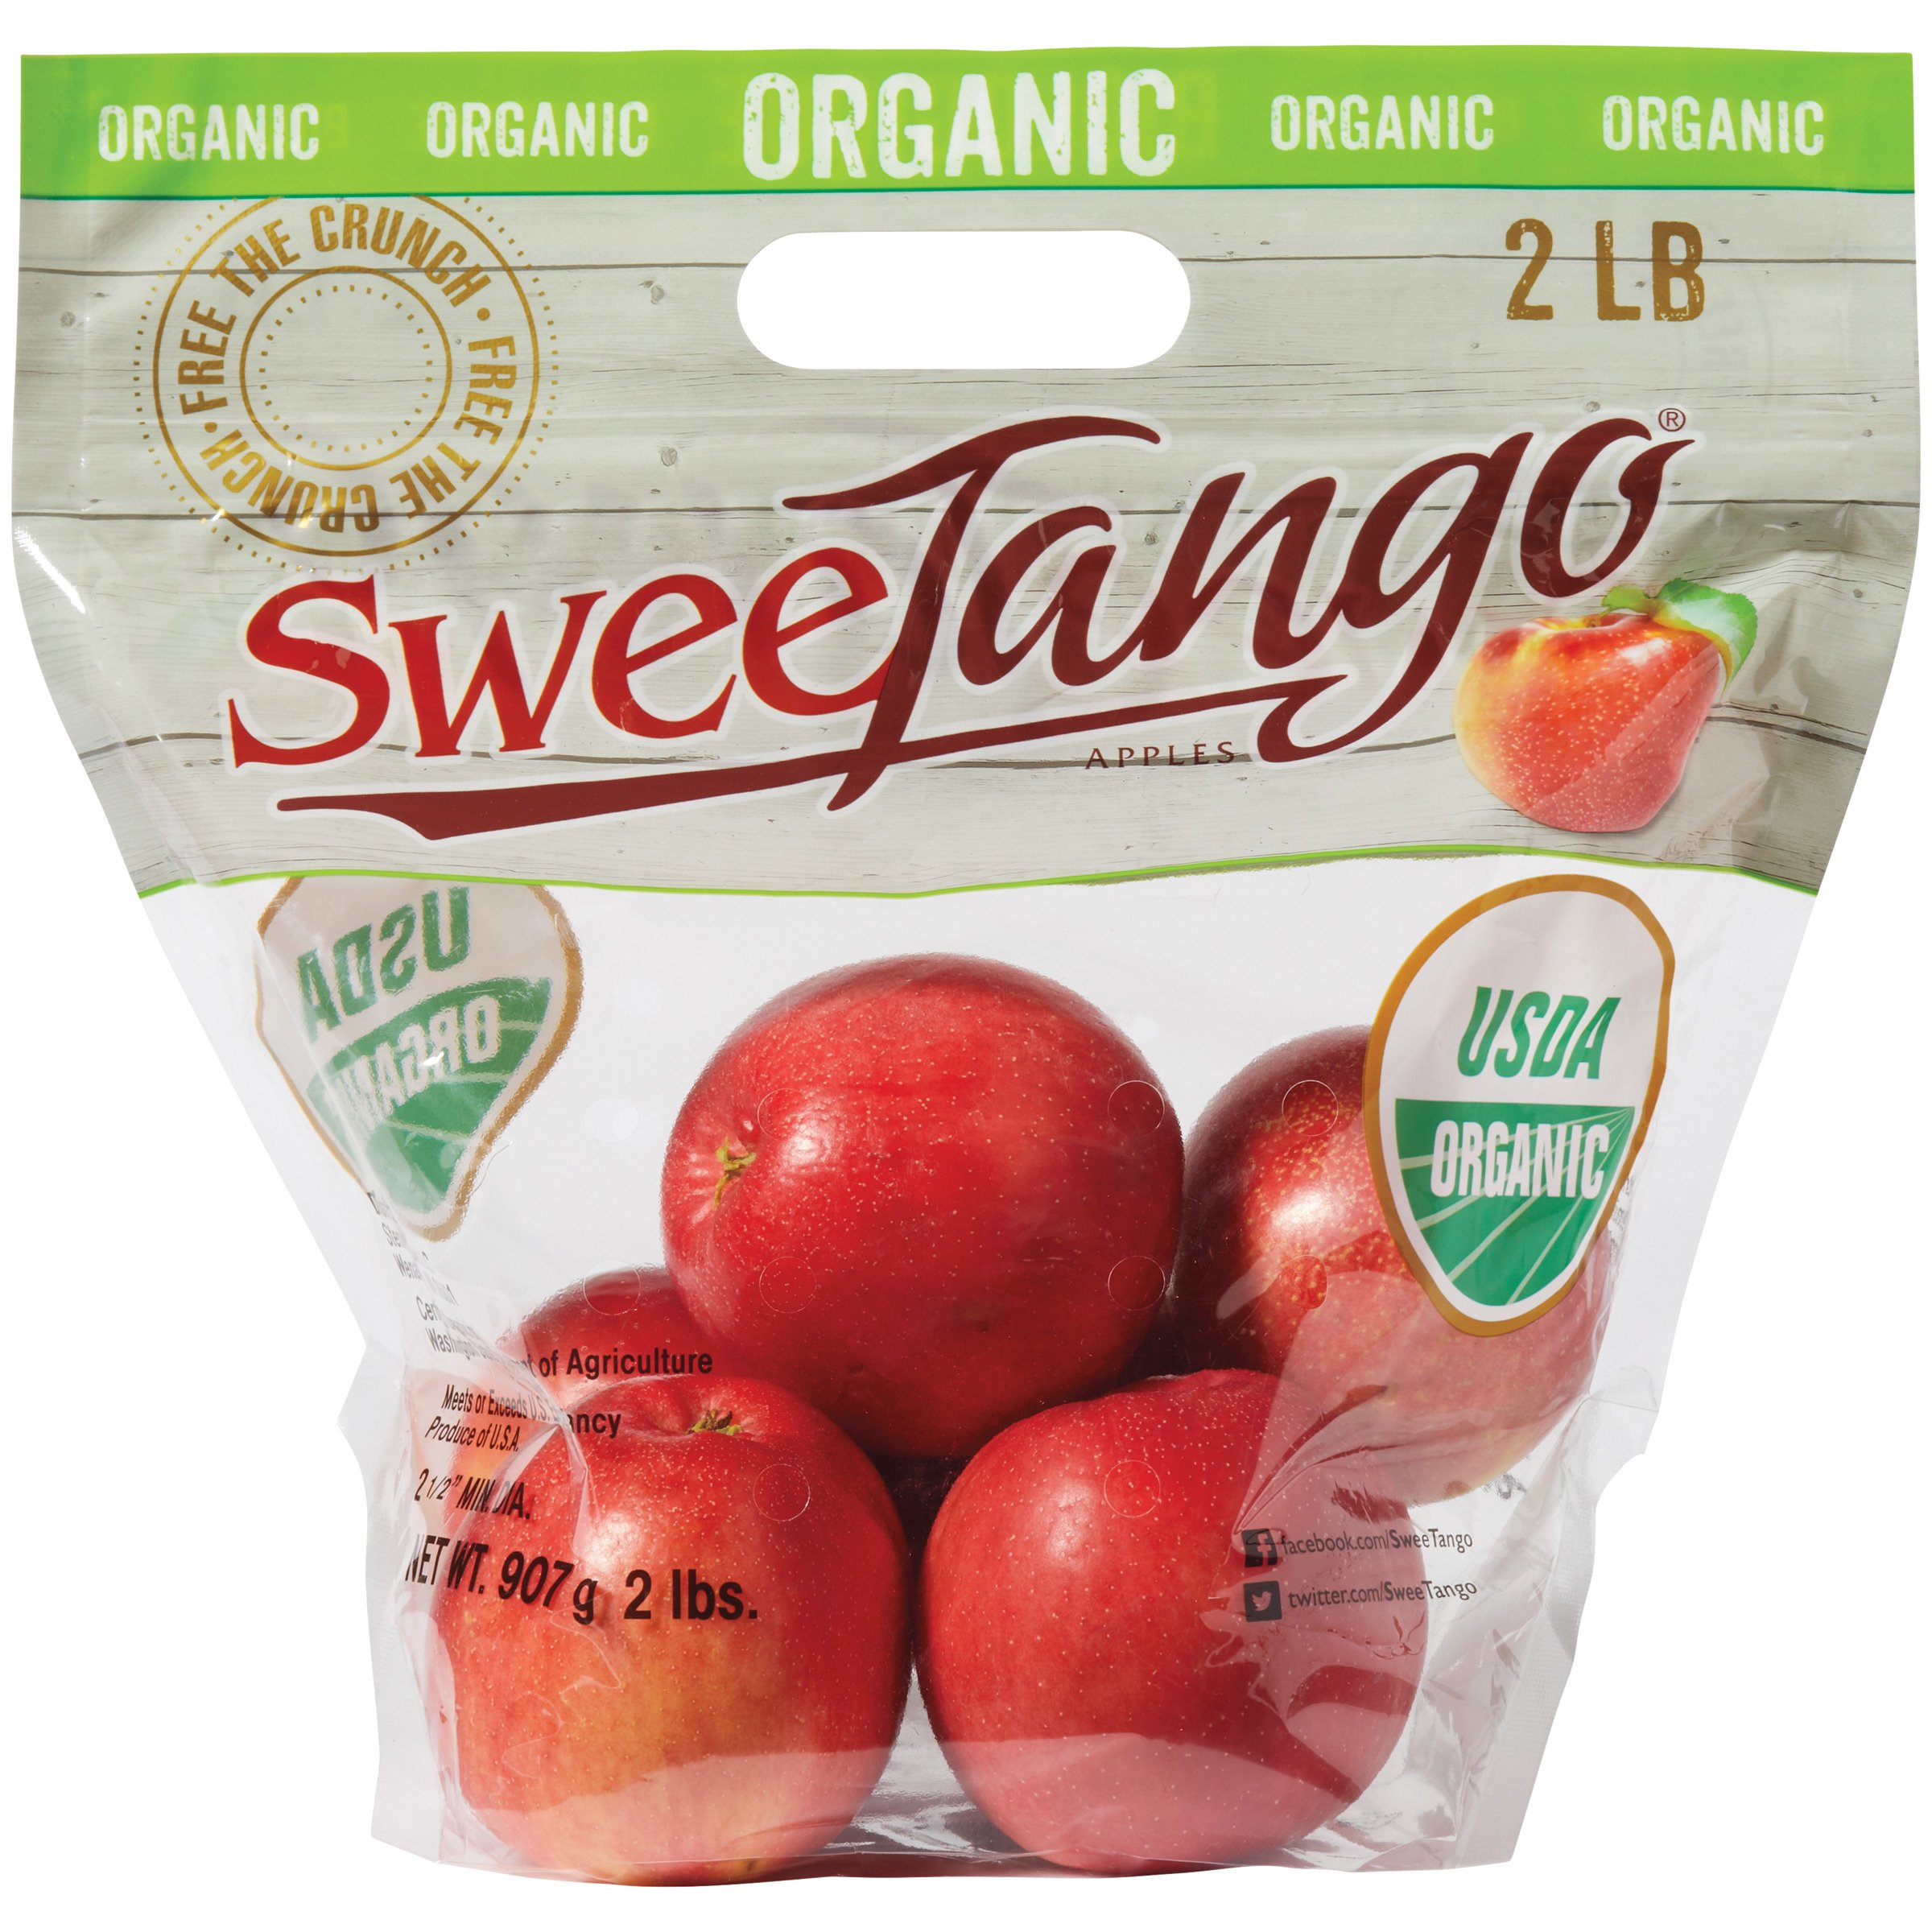 Sugarbee Apples 2lb Bag